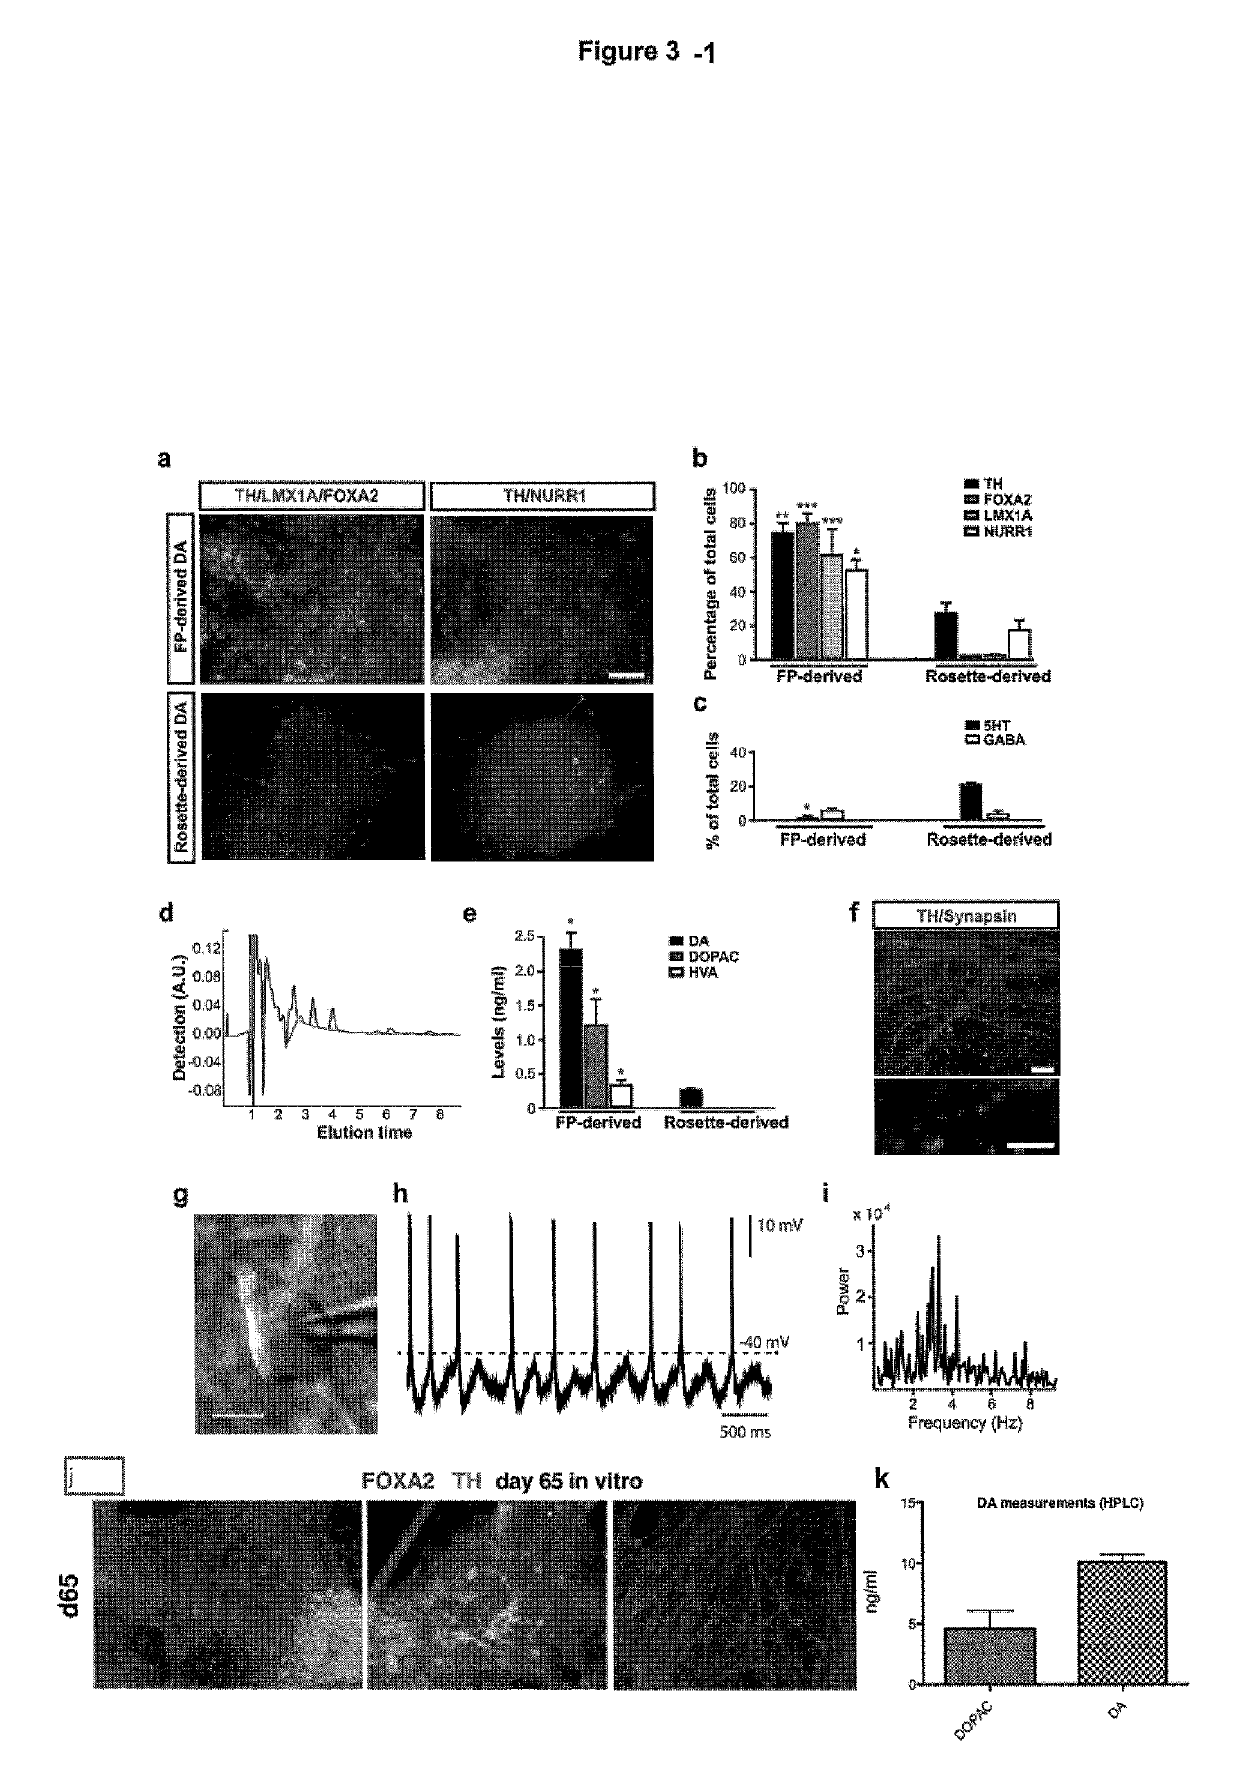 Midbrain dopamine (DA) neurons for engraftment